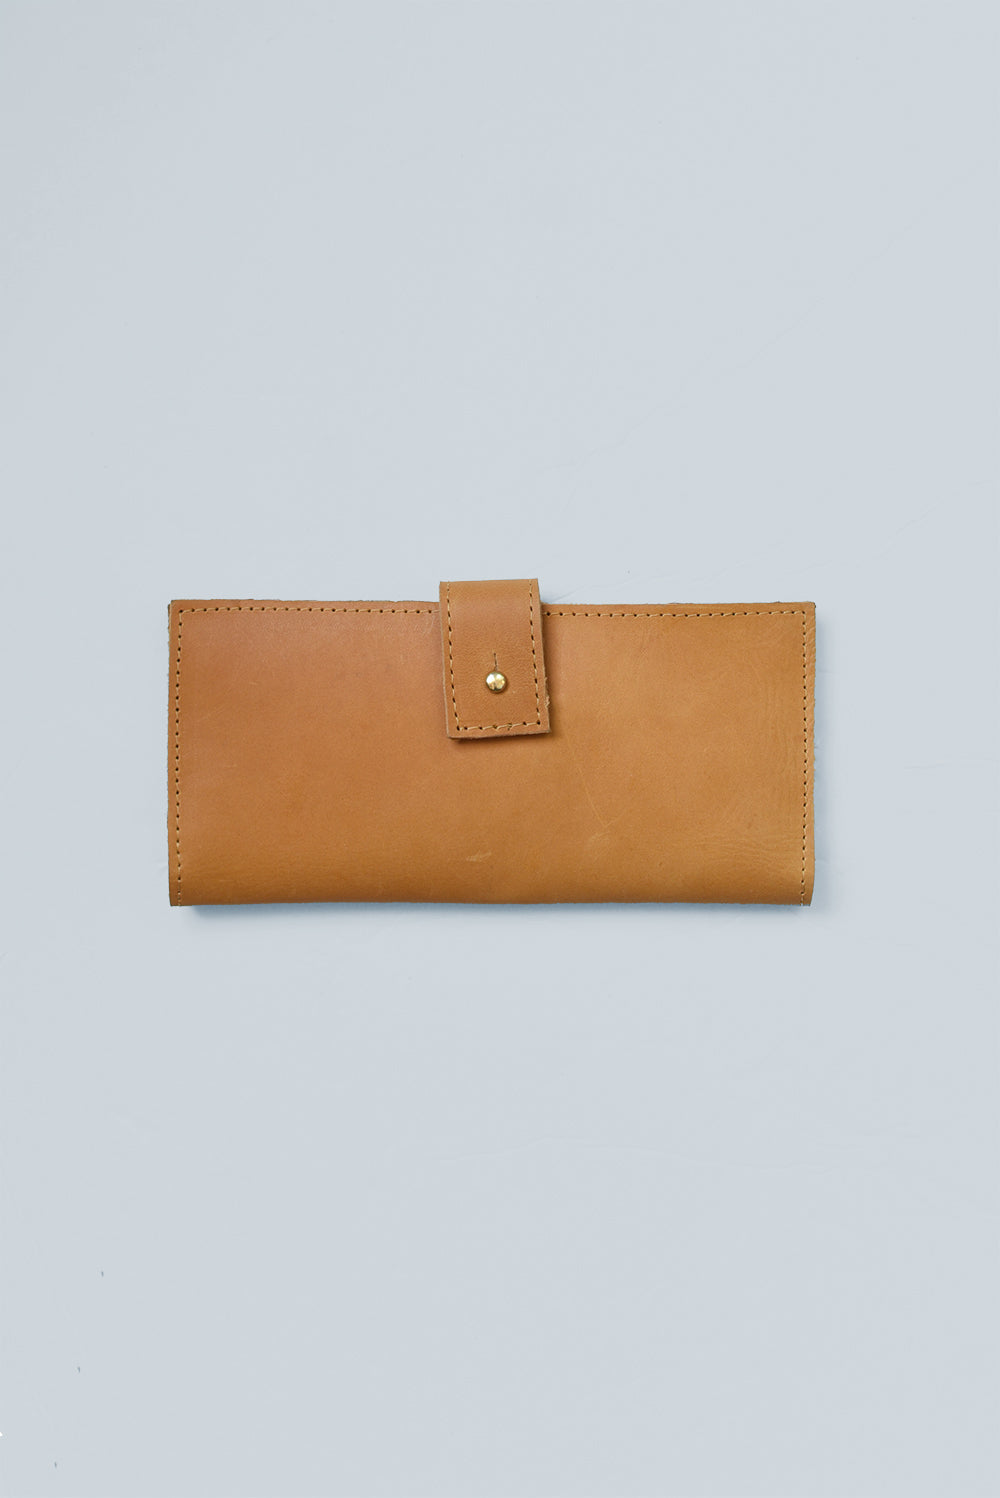 ethical handmade custom branded leather wallets